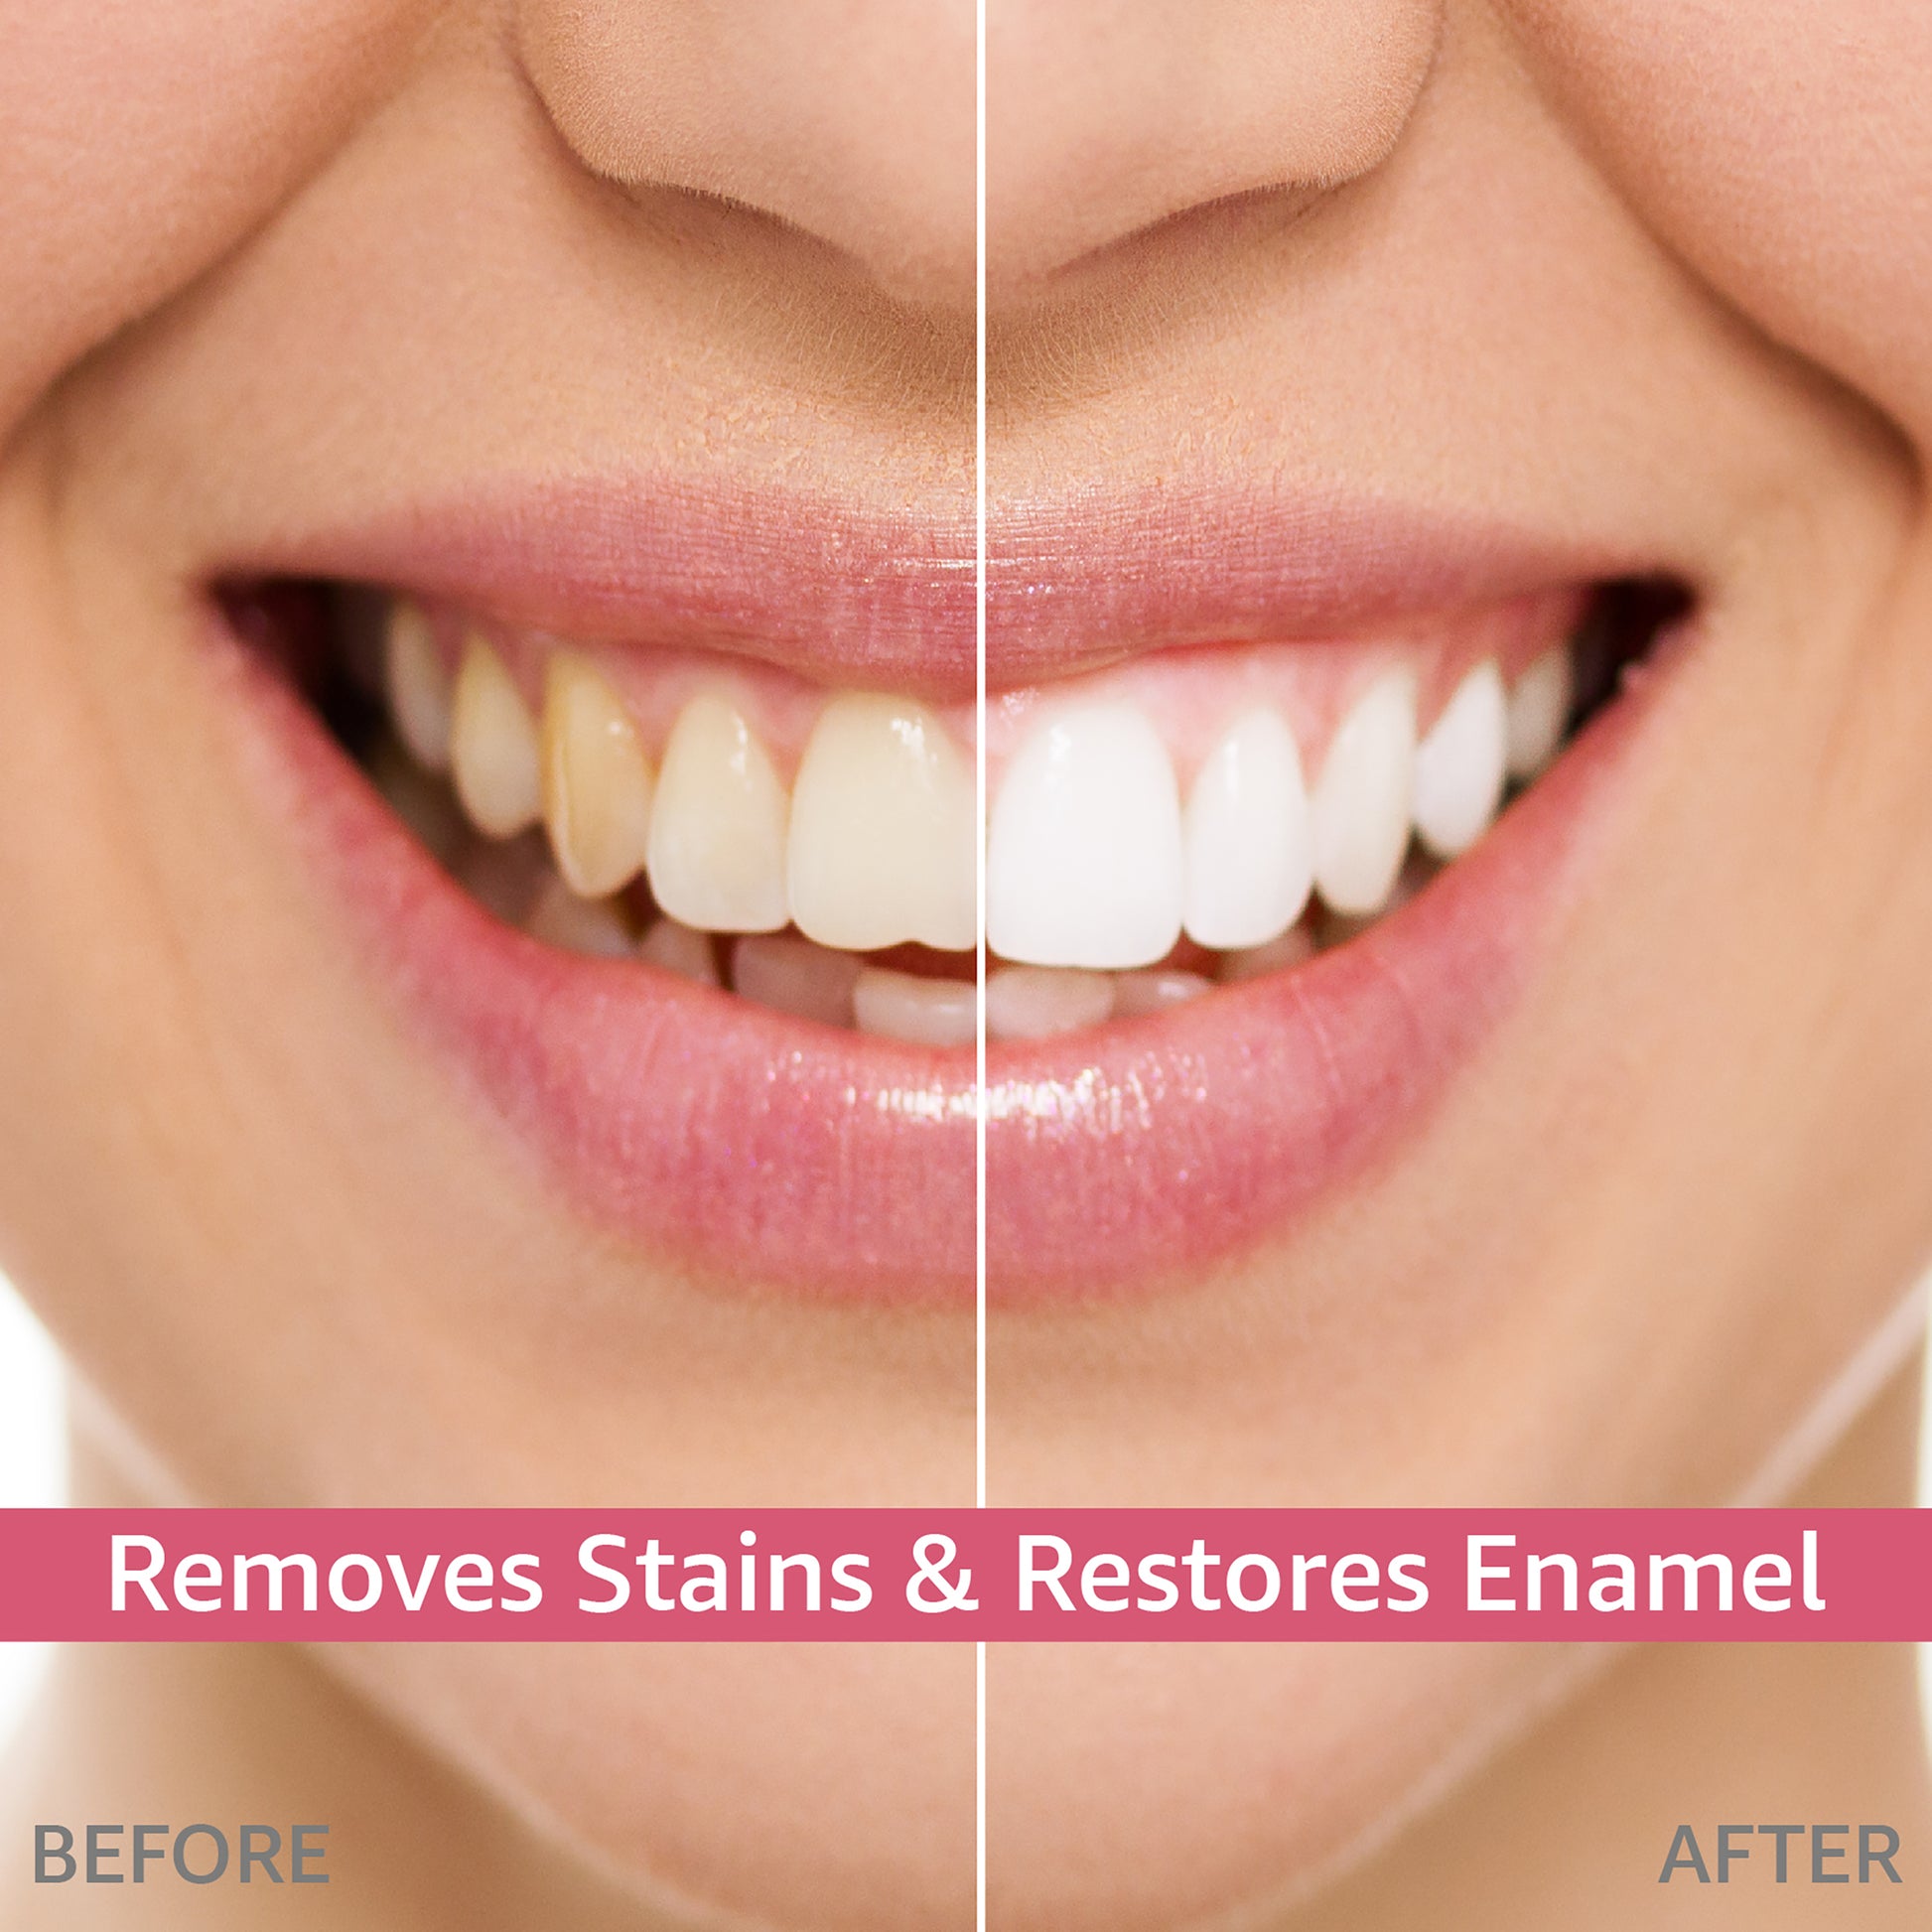 Removes stains & restores enamel